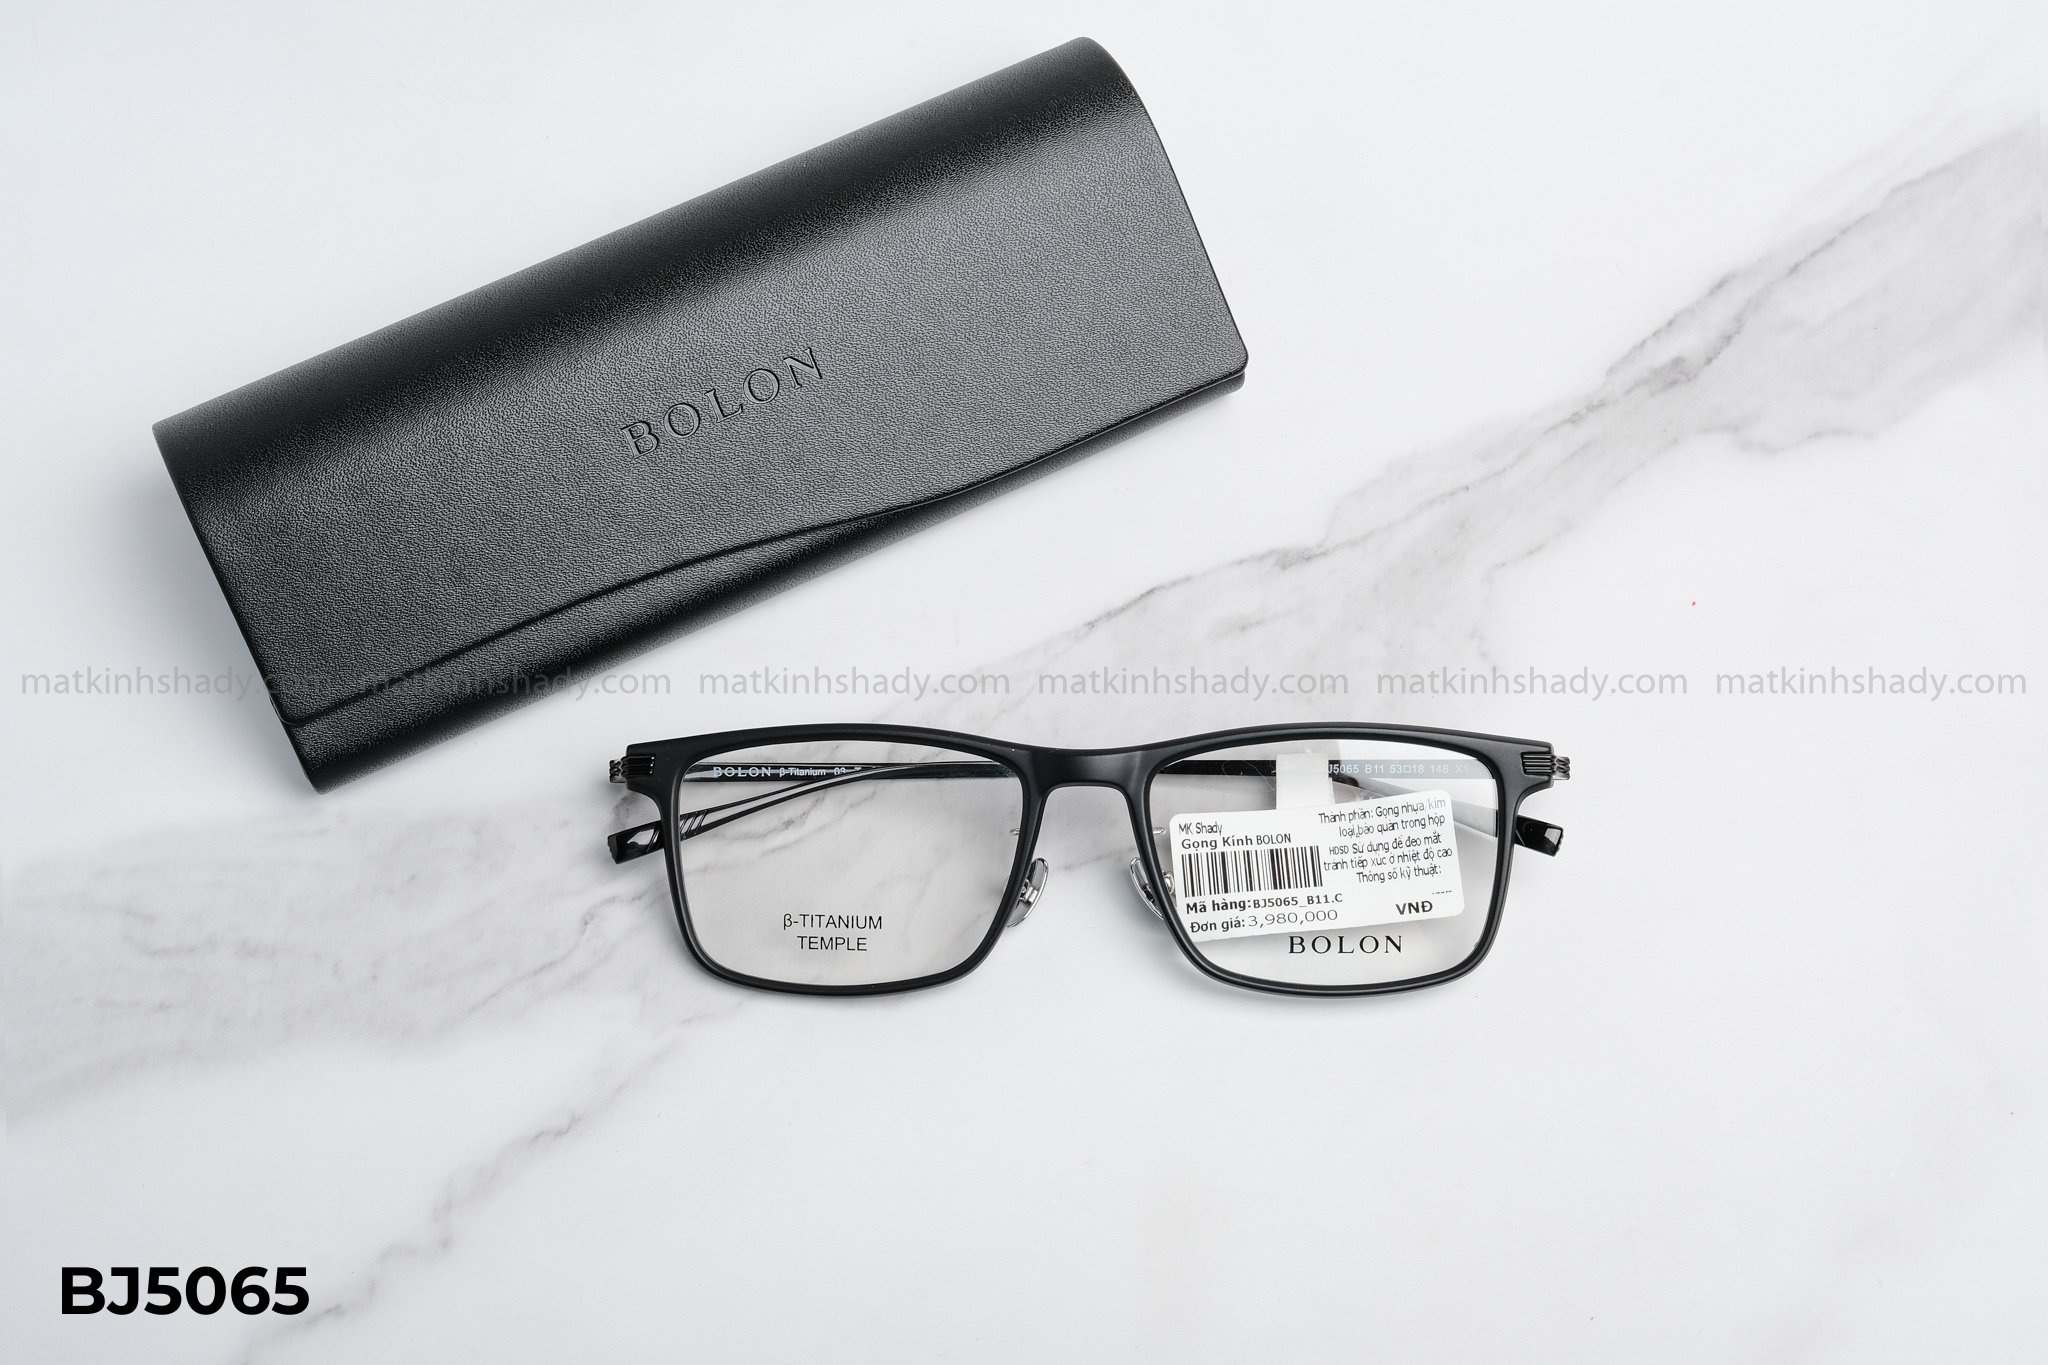  Bolon Eyewear - Glasses - BJ5065 